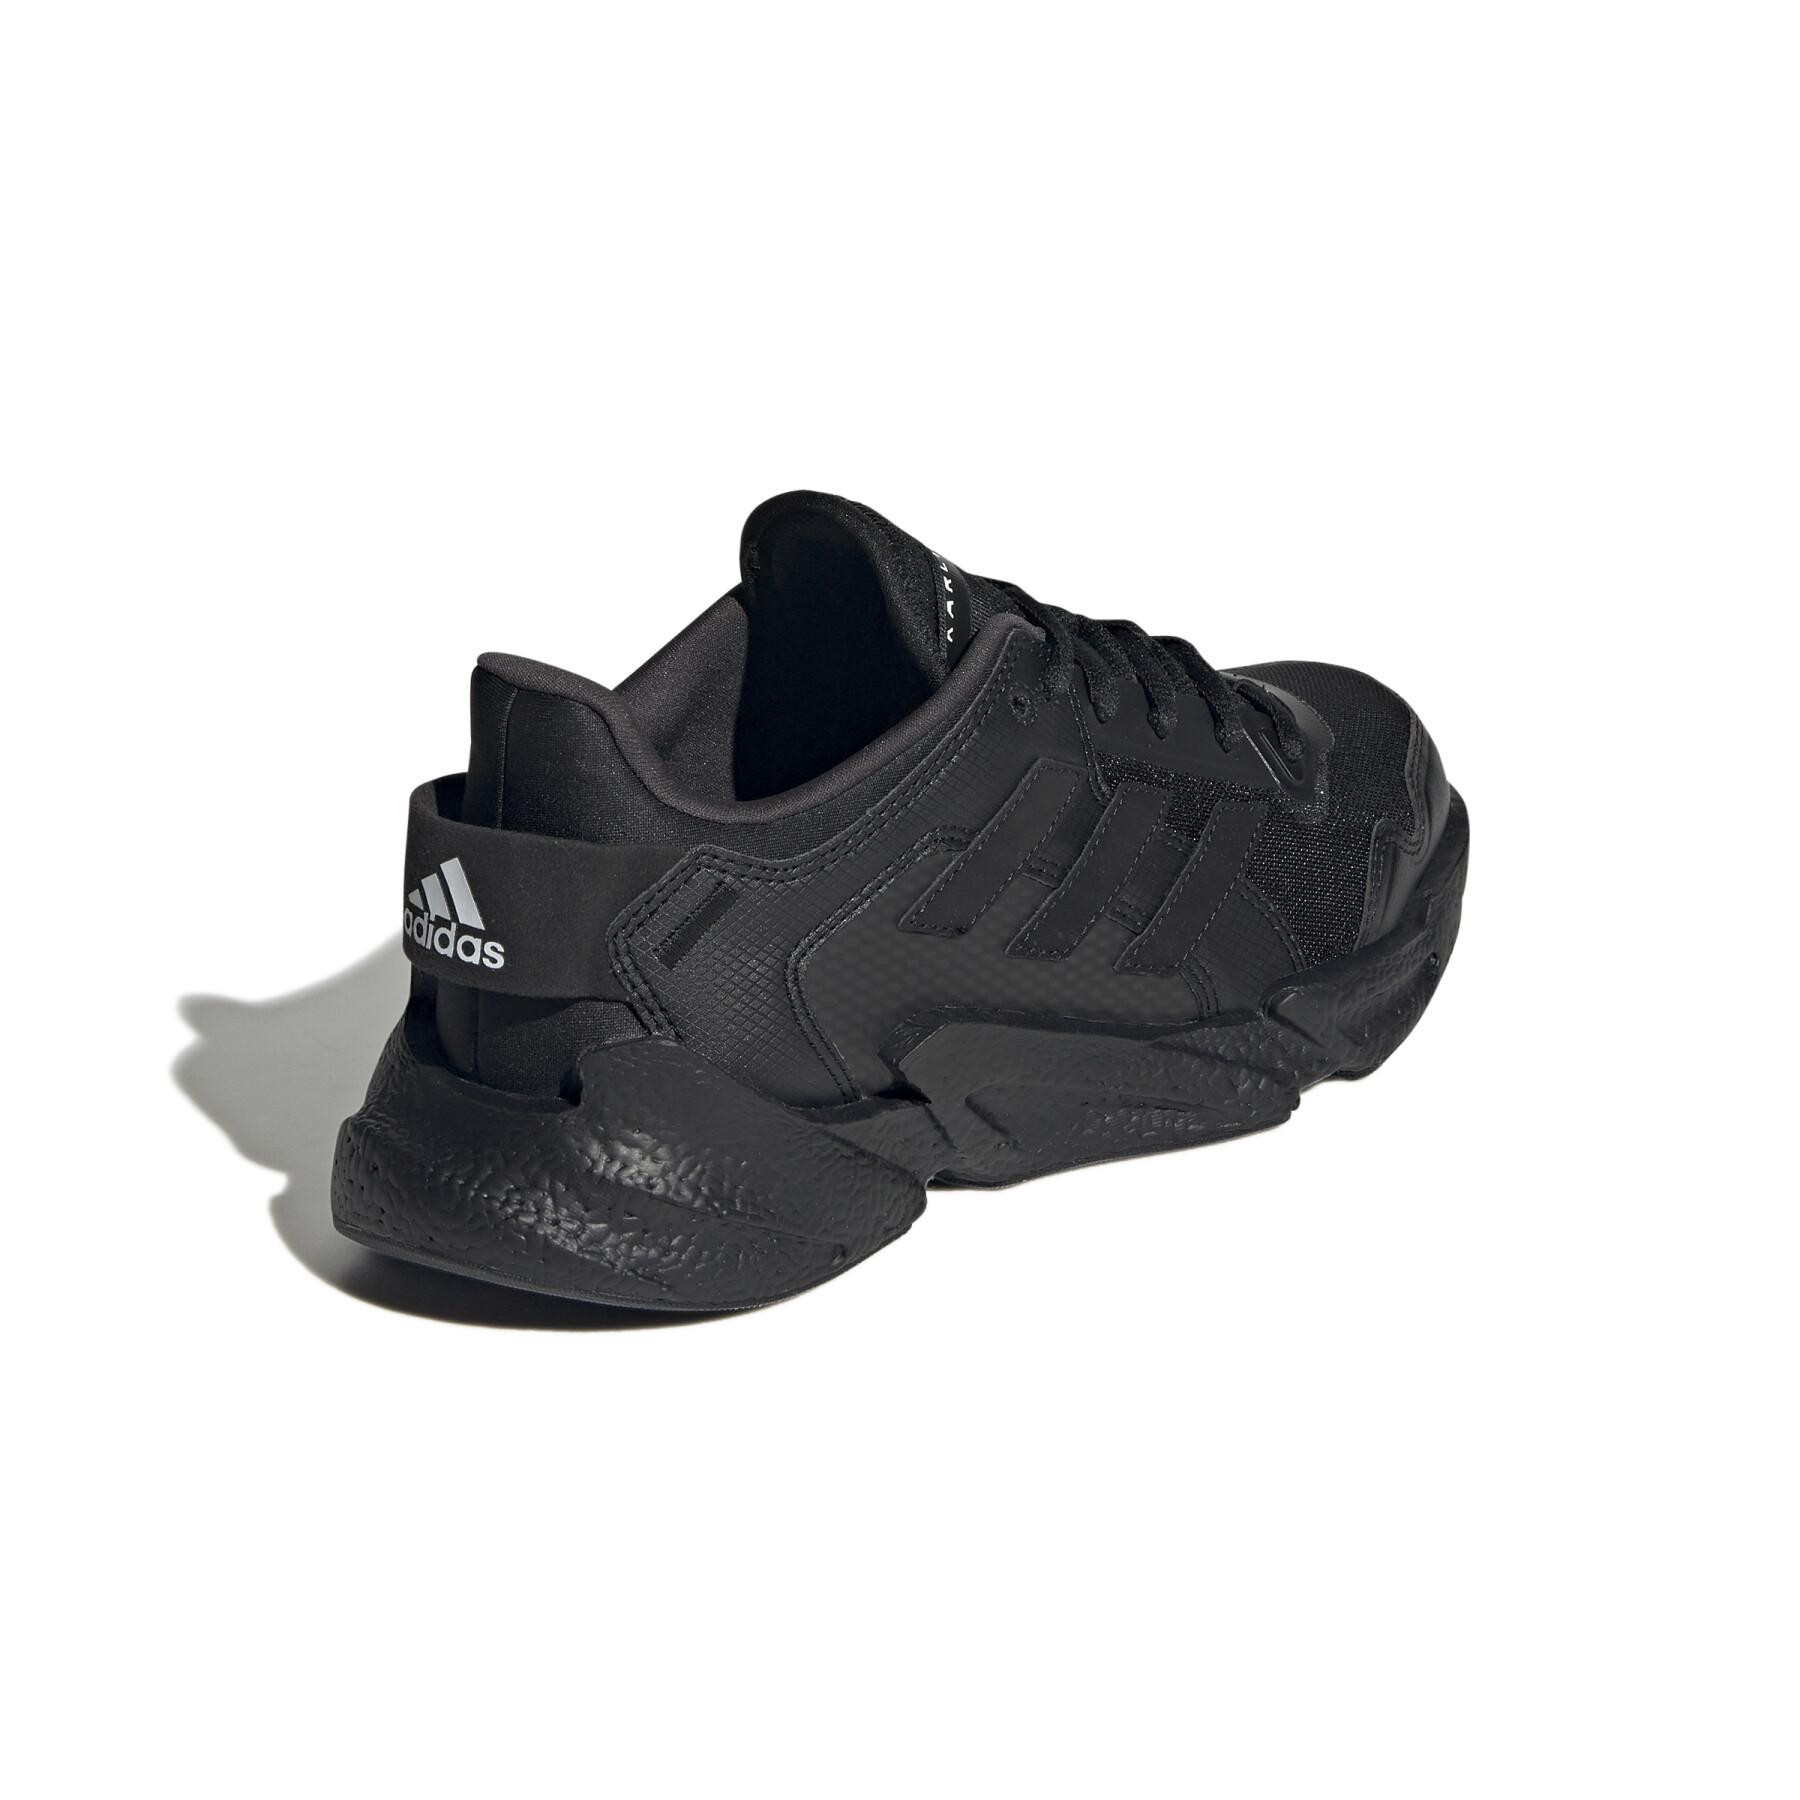 Sapatos de corrida para mulheres adidas Karlie Kloss X9000